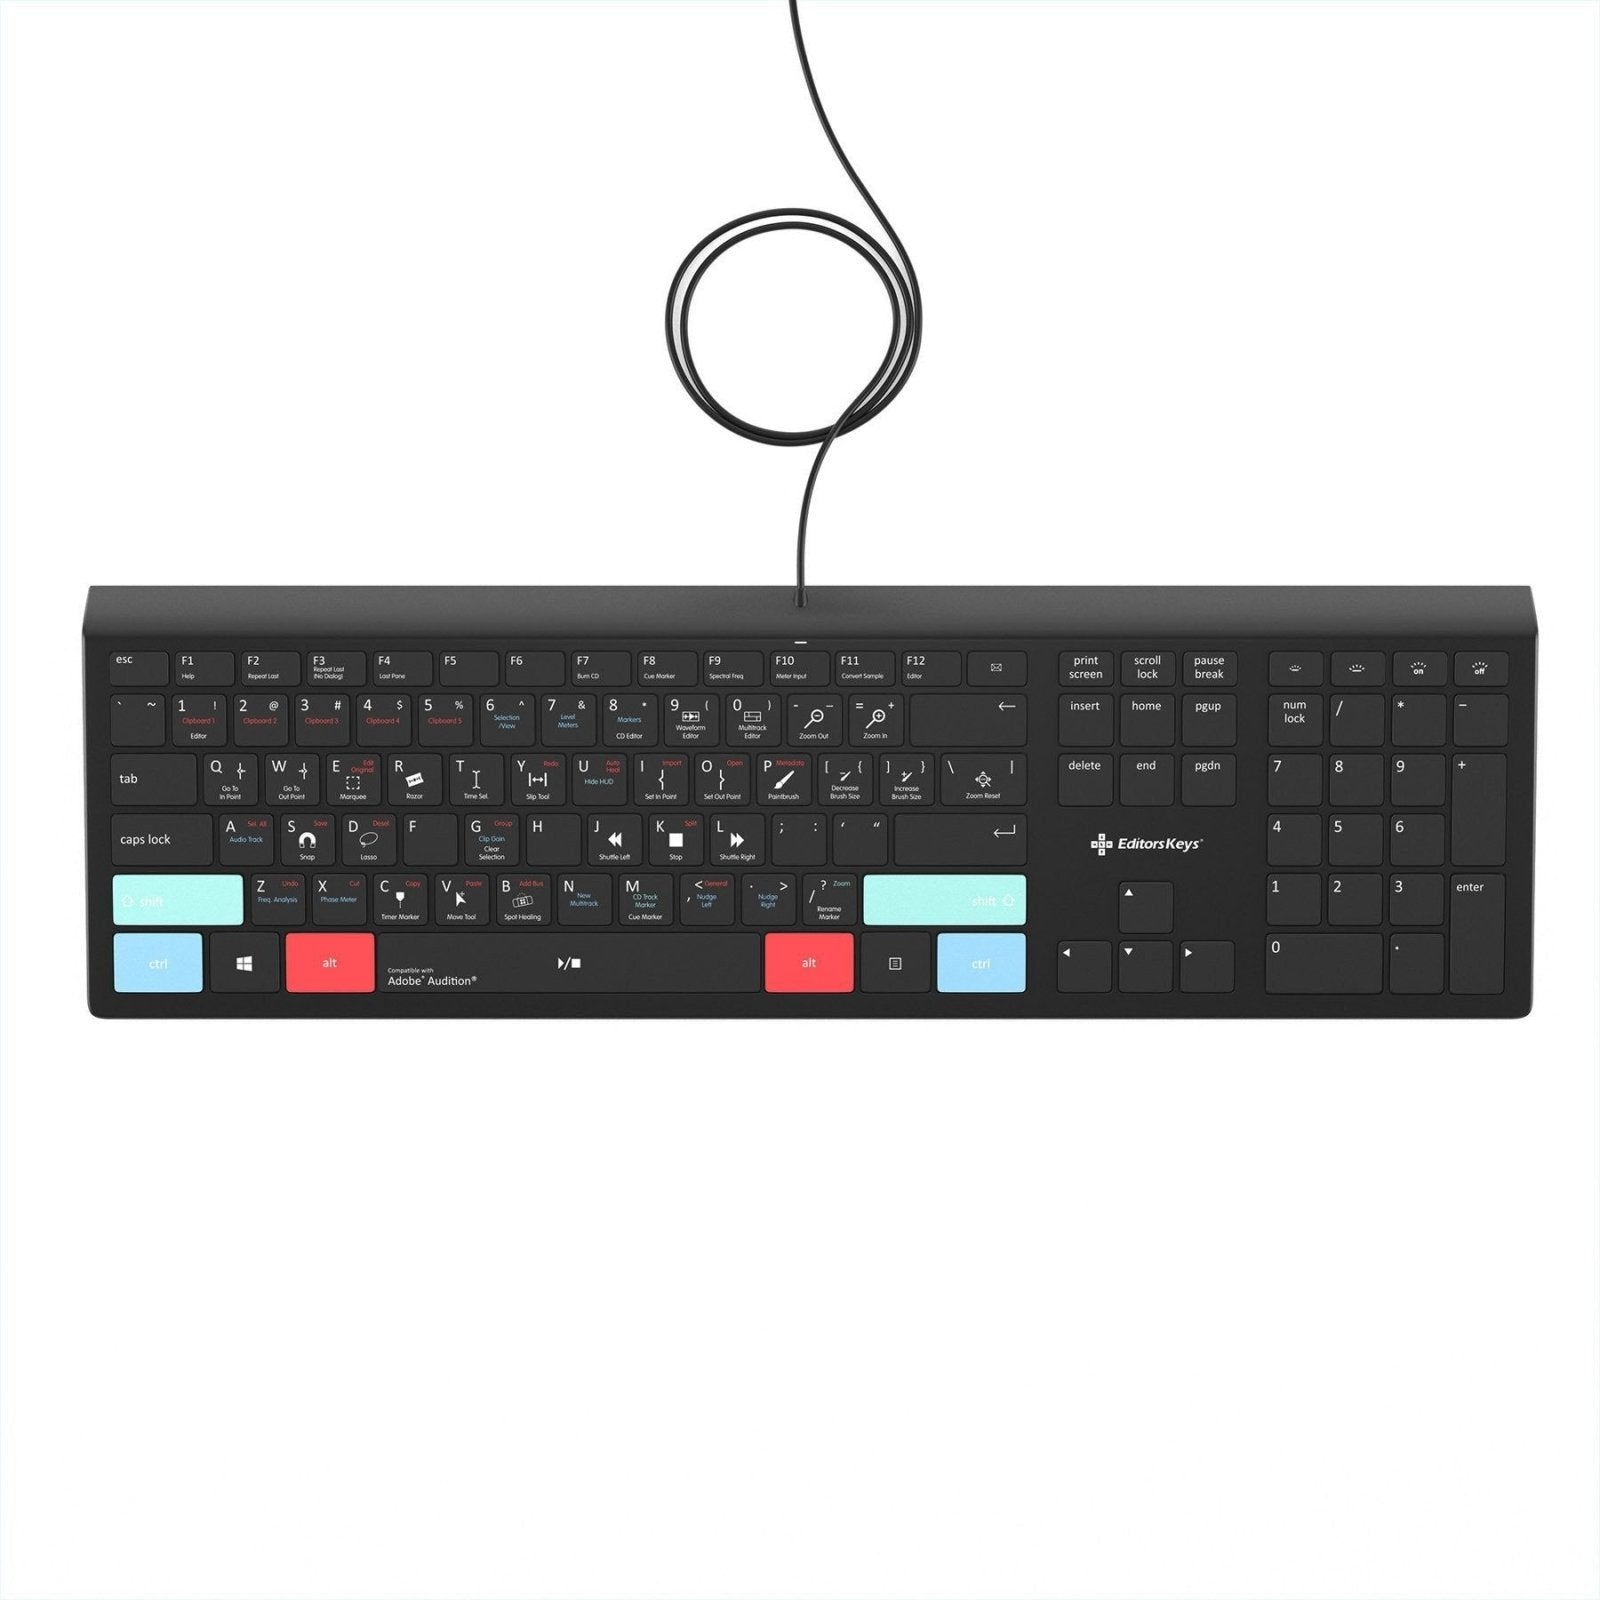 Adobe Audition Keyboard - Backlit Mac & PC - Editors Keys